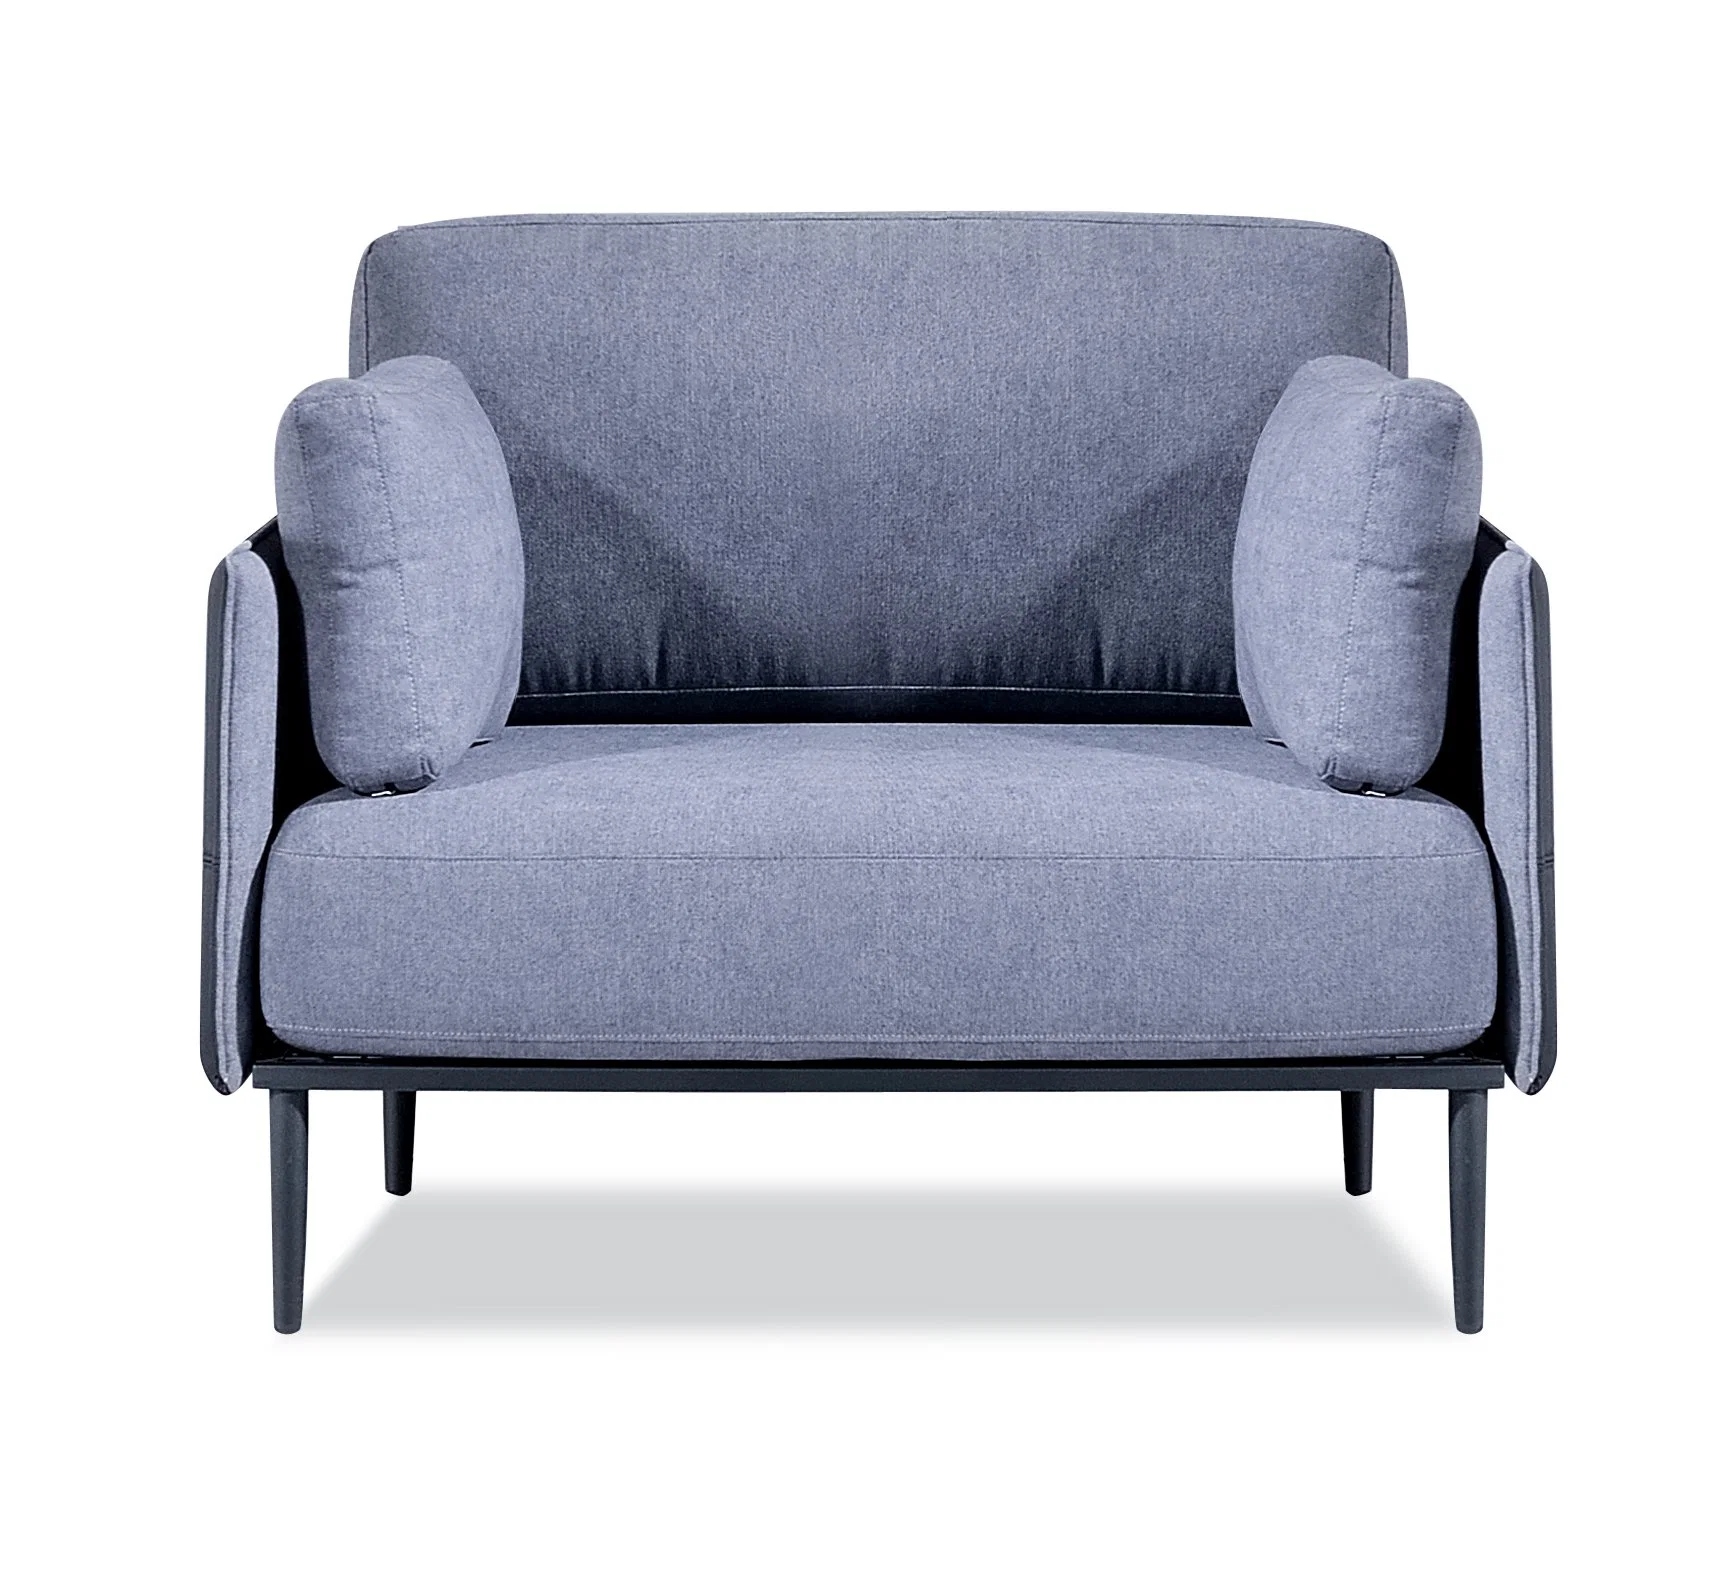 Zode Modern Classic Fabric Reclining Sofa Bed Chair Home Sofa Set Furniture